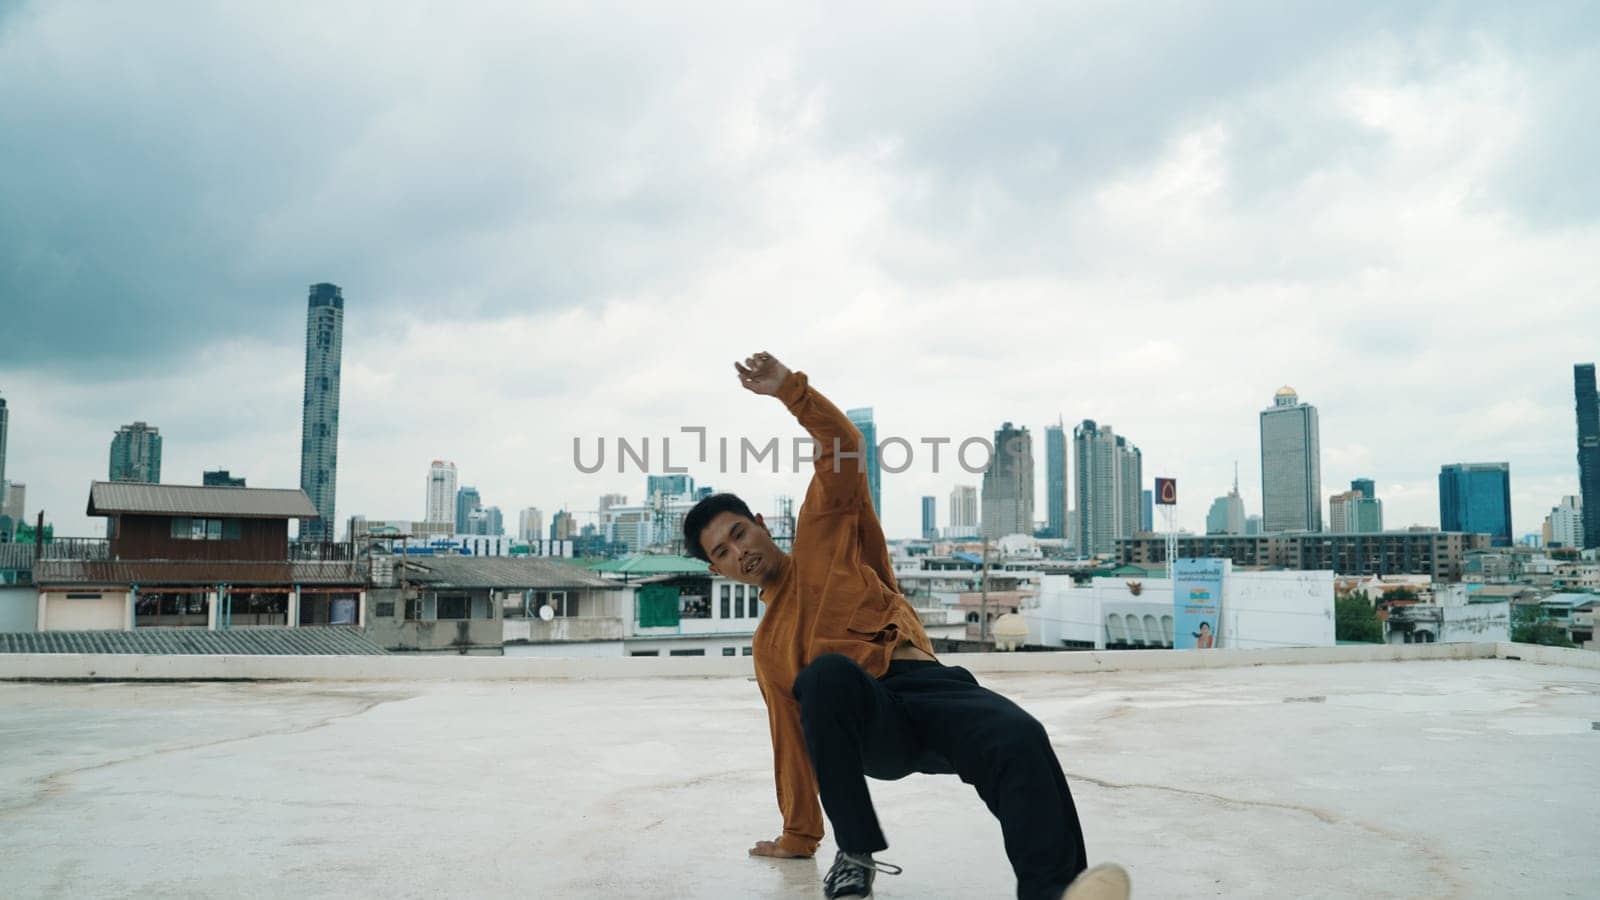 Motion shot of B-boy dance performance by professional street dancer. Endeavor. by biancoblue